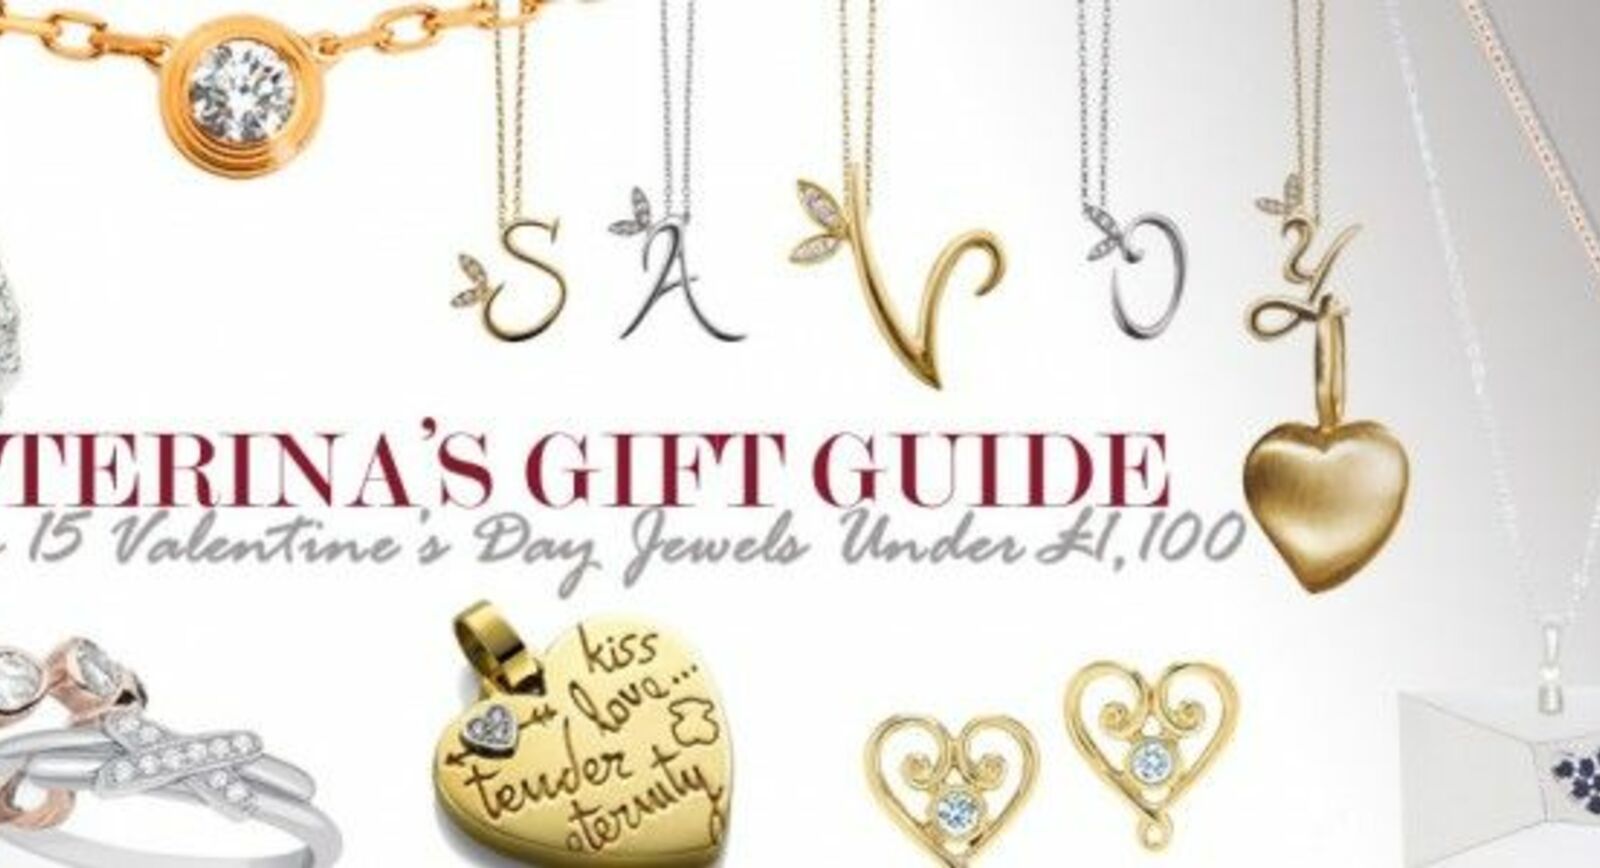 TOP 15 Valentine’s Day Jewellery Under £1,100 To Buy Online